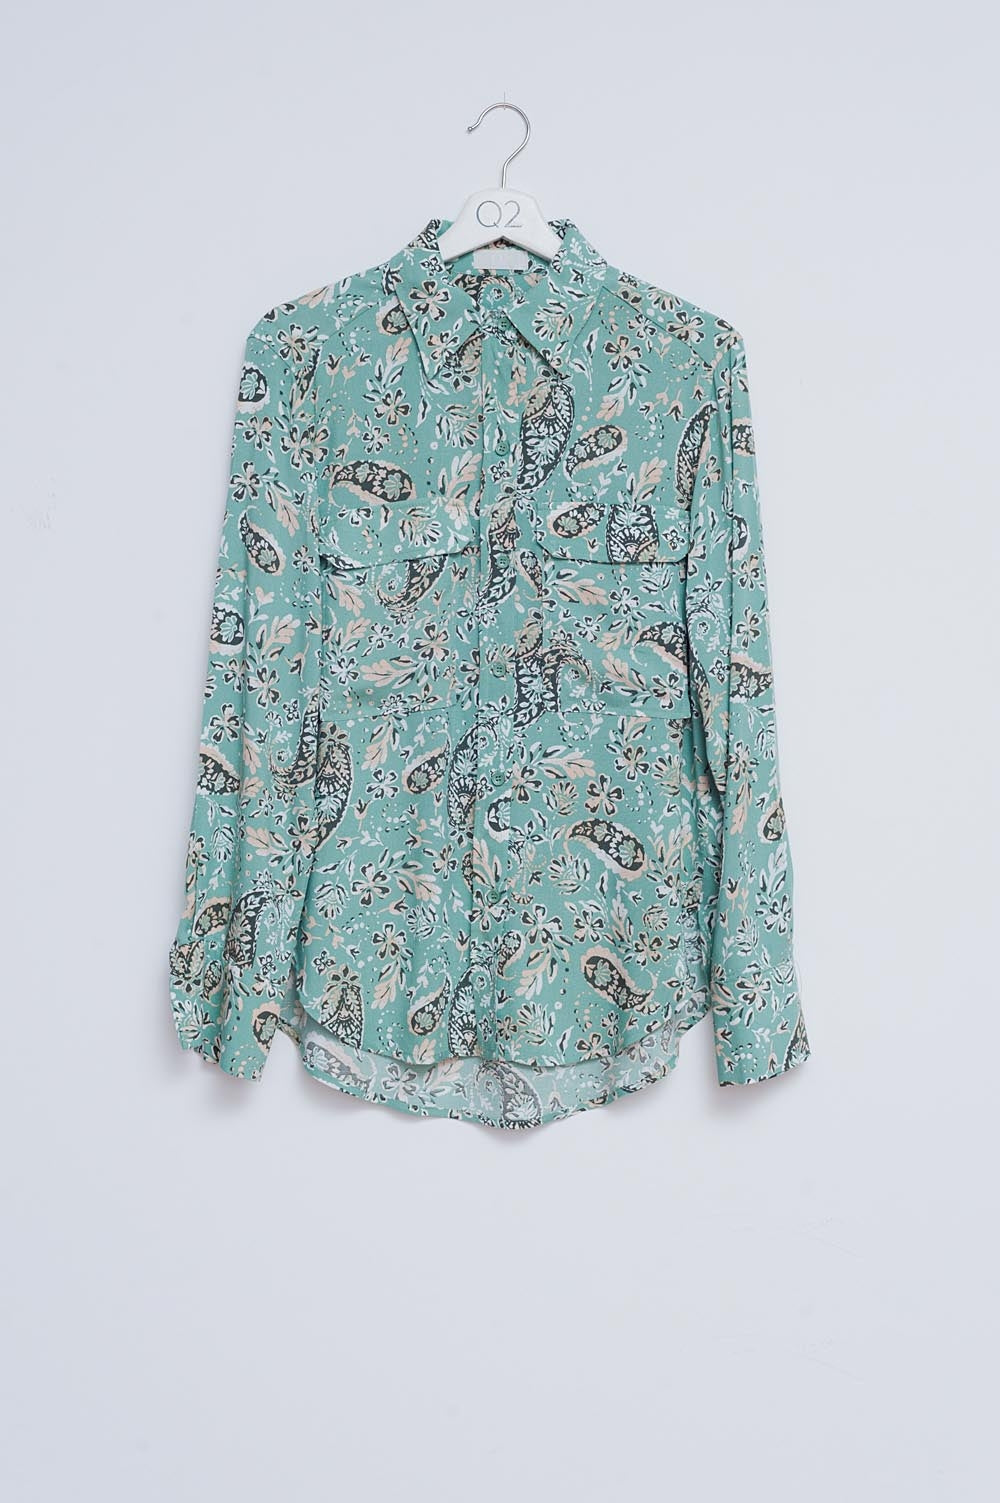 Long sleeve shirt in green mixed paisley floral print